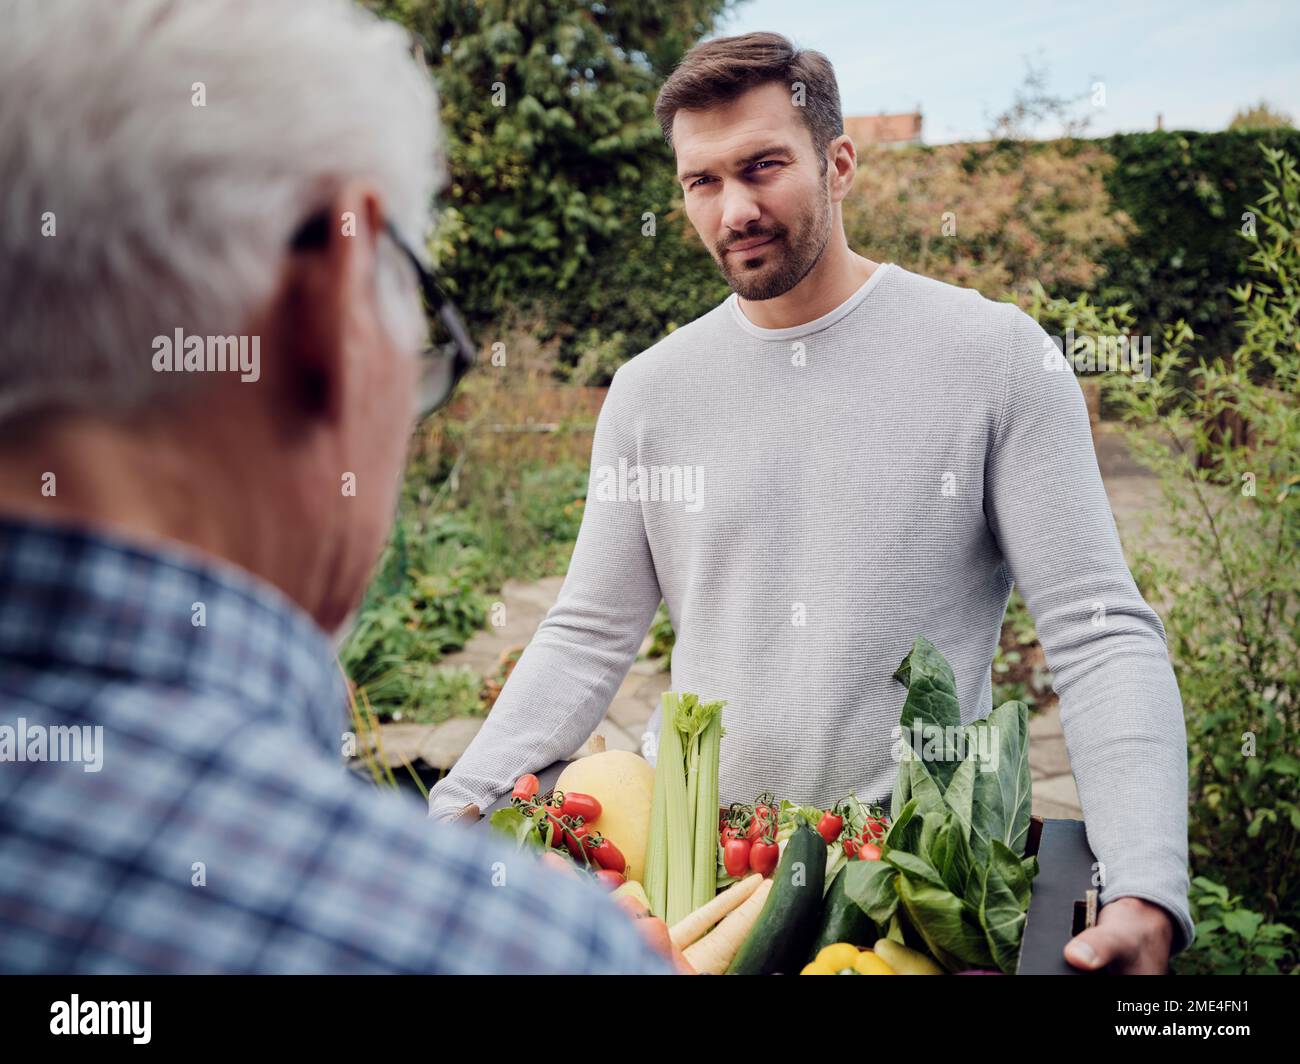 Man delivering a fresh vegetable box to senior man in garden Stock Photo